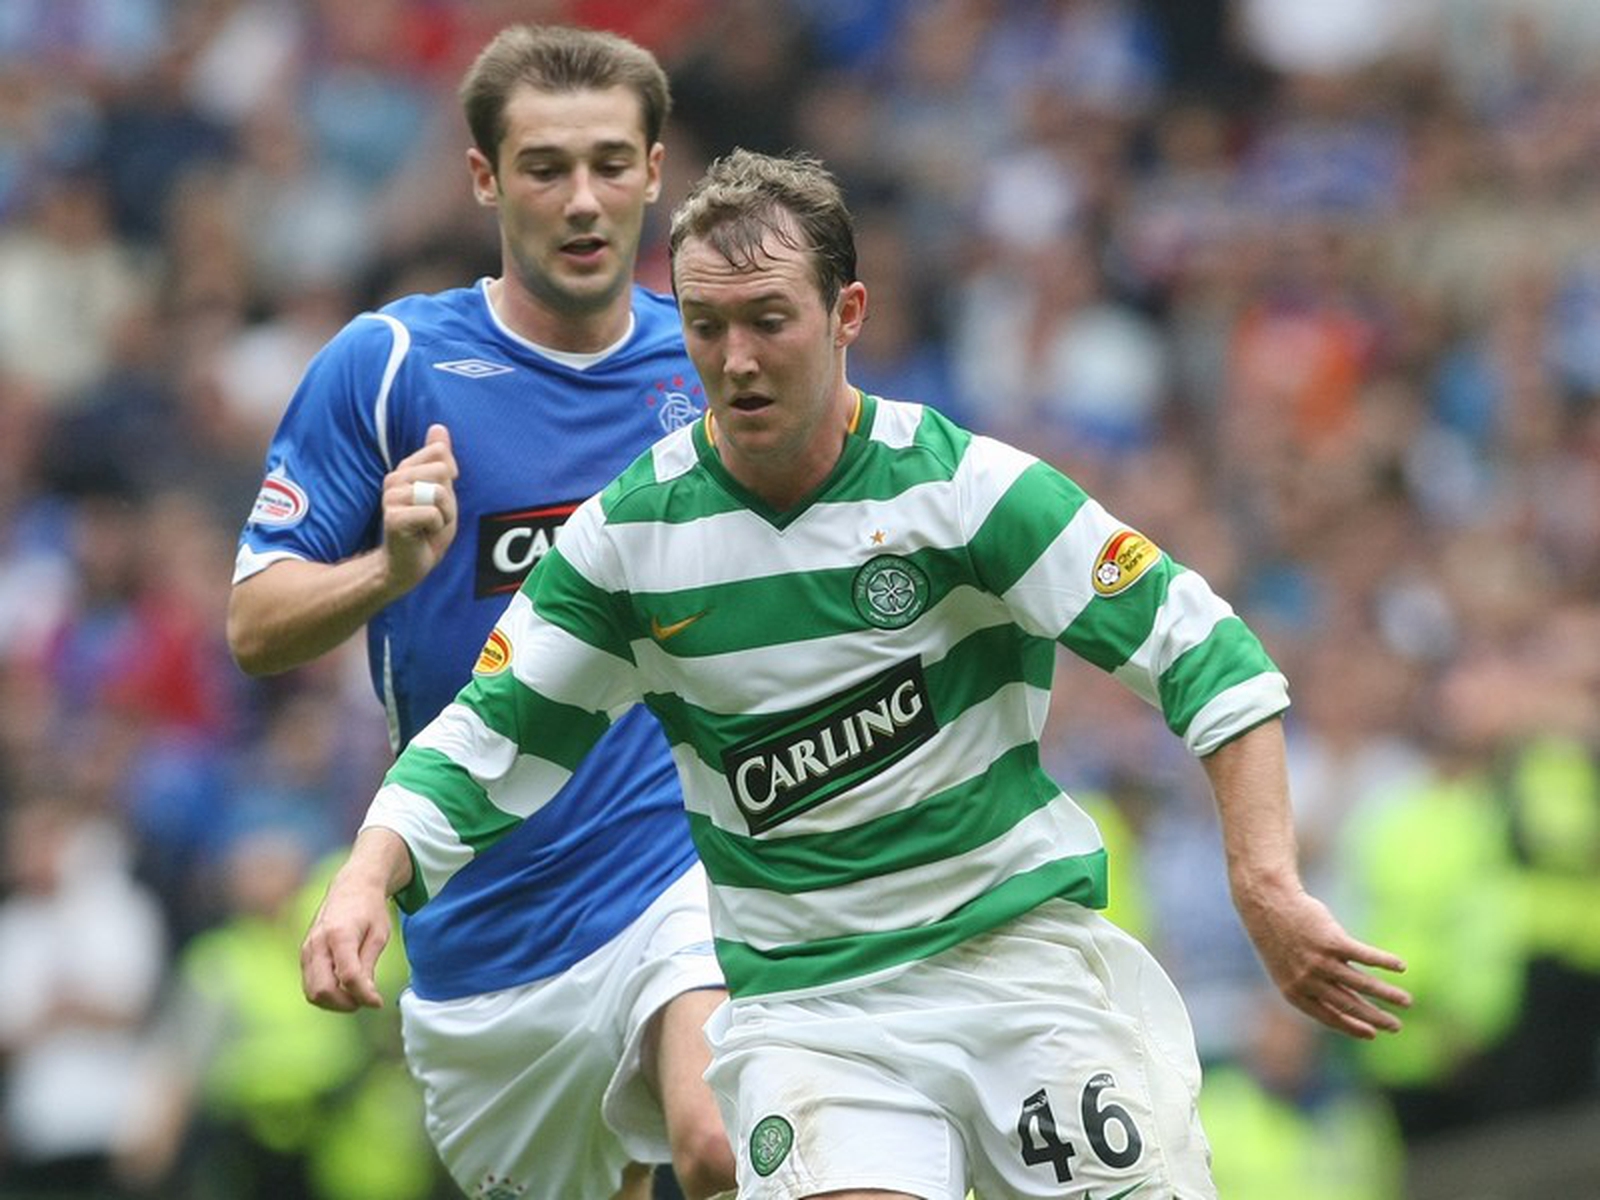 SPL: Georgios Samaras scores twice as Celtic win 4-0 at Dundee United, Football News